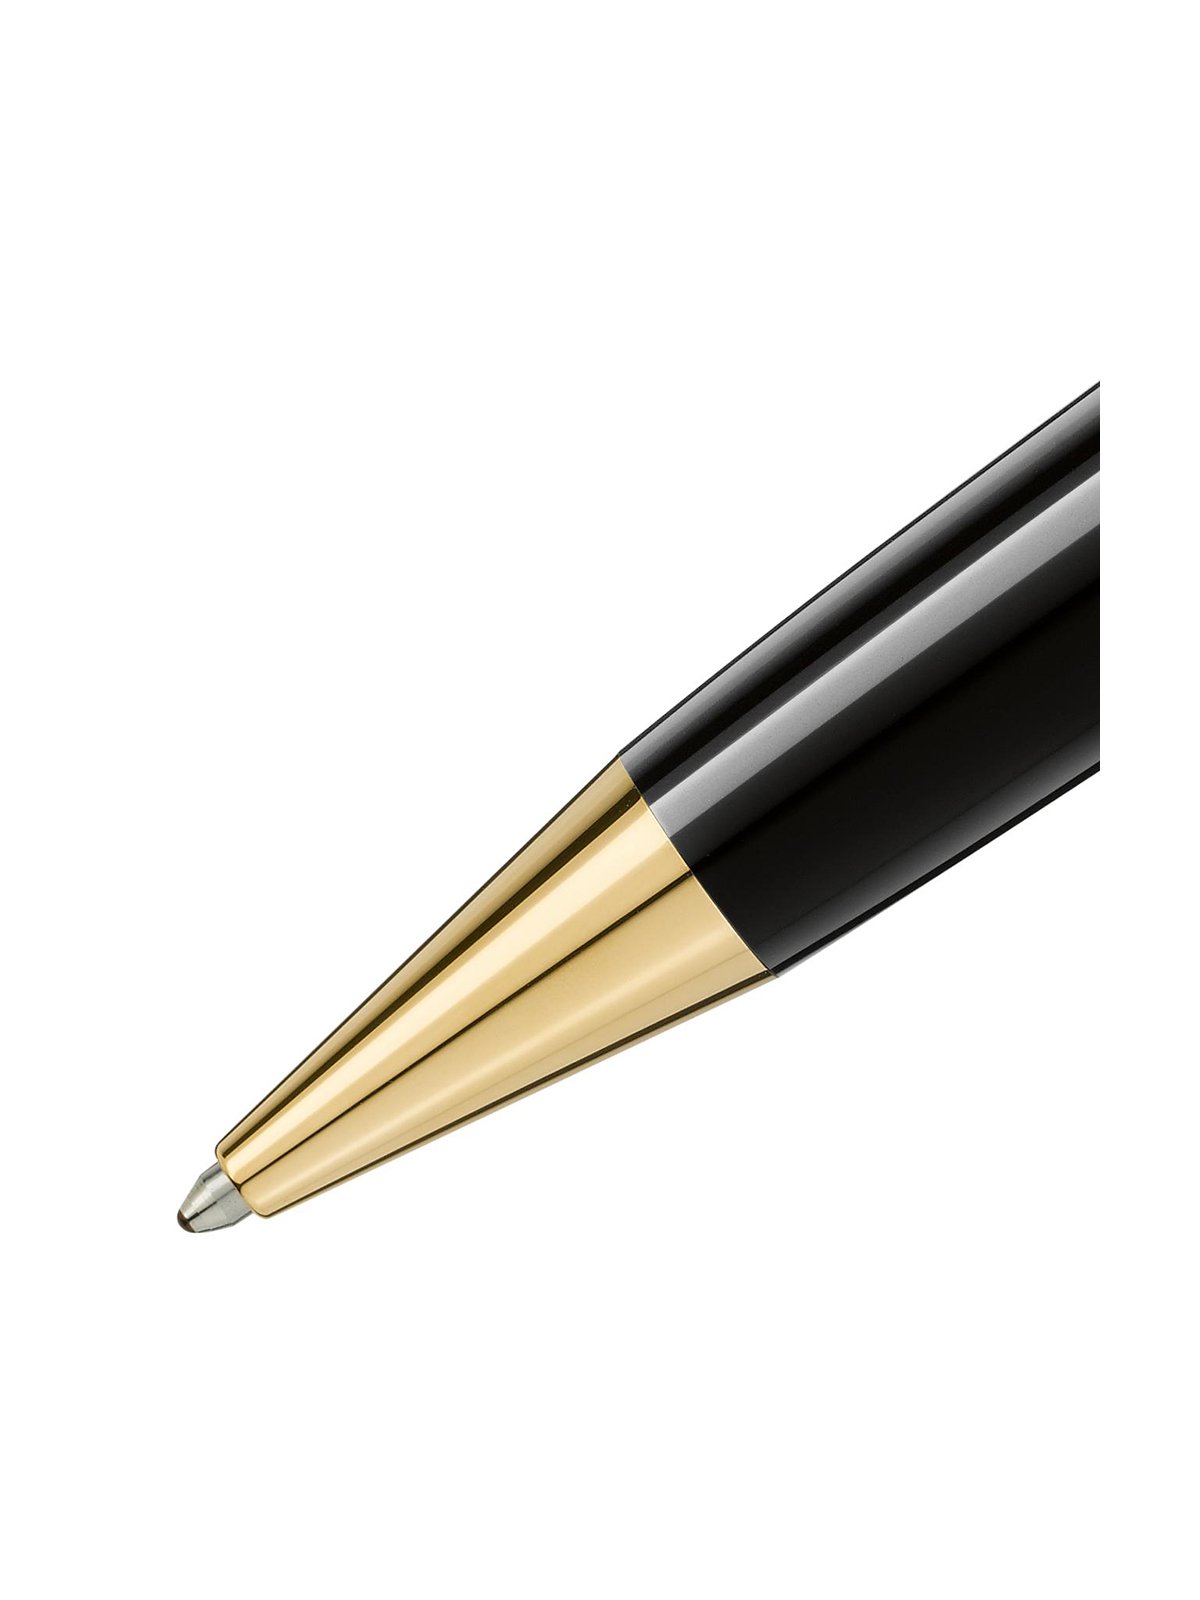 Montblanc Meisterstuck Gold-Coated LeGrand Ballpoint Pen MB10456